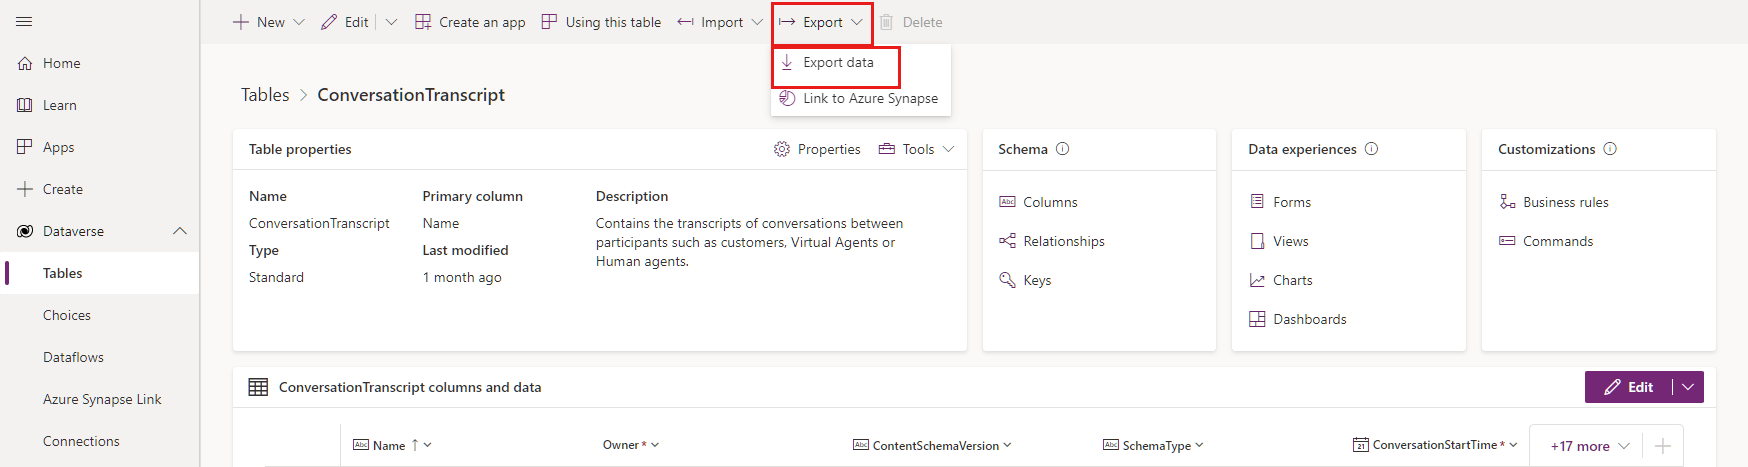 Снимок экрана параметр экспорта данных таблицы ConversationTranscript.